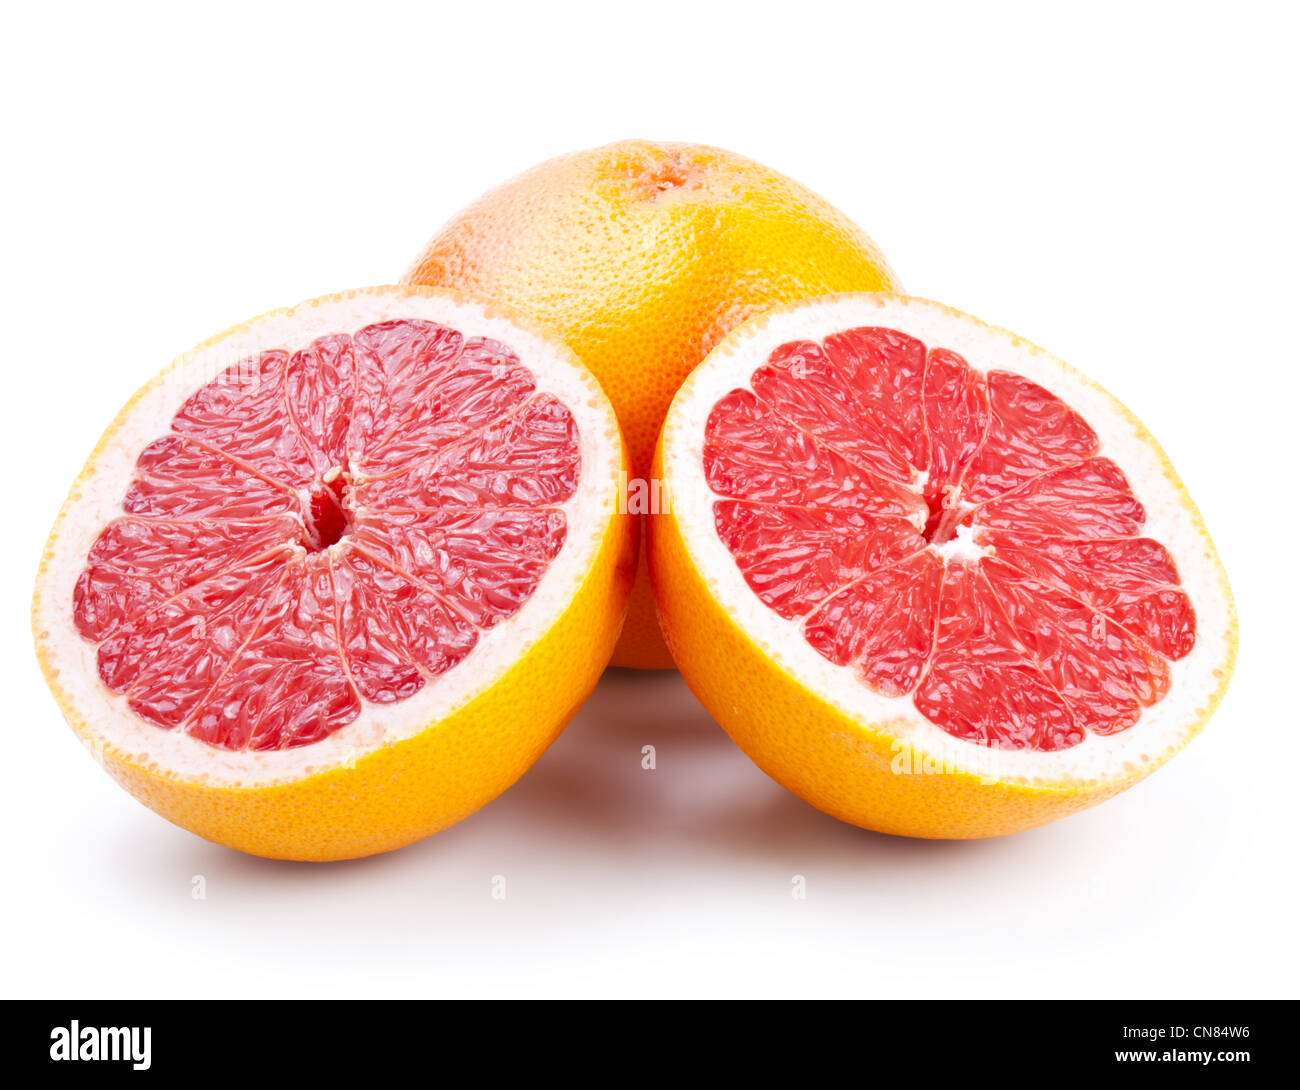 grapefruit with slices isolated on white background Stock Photo